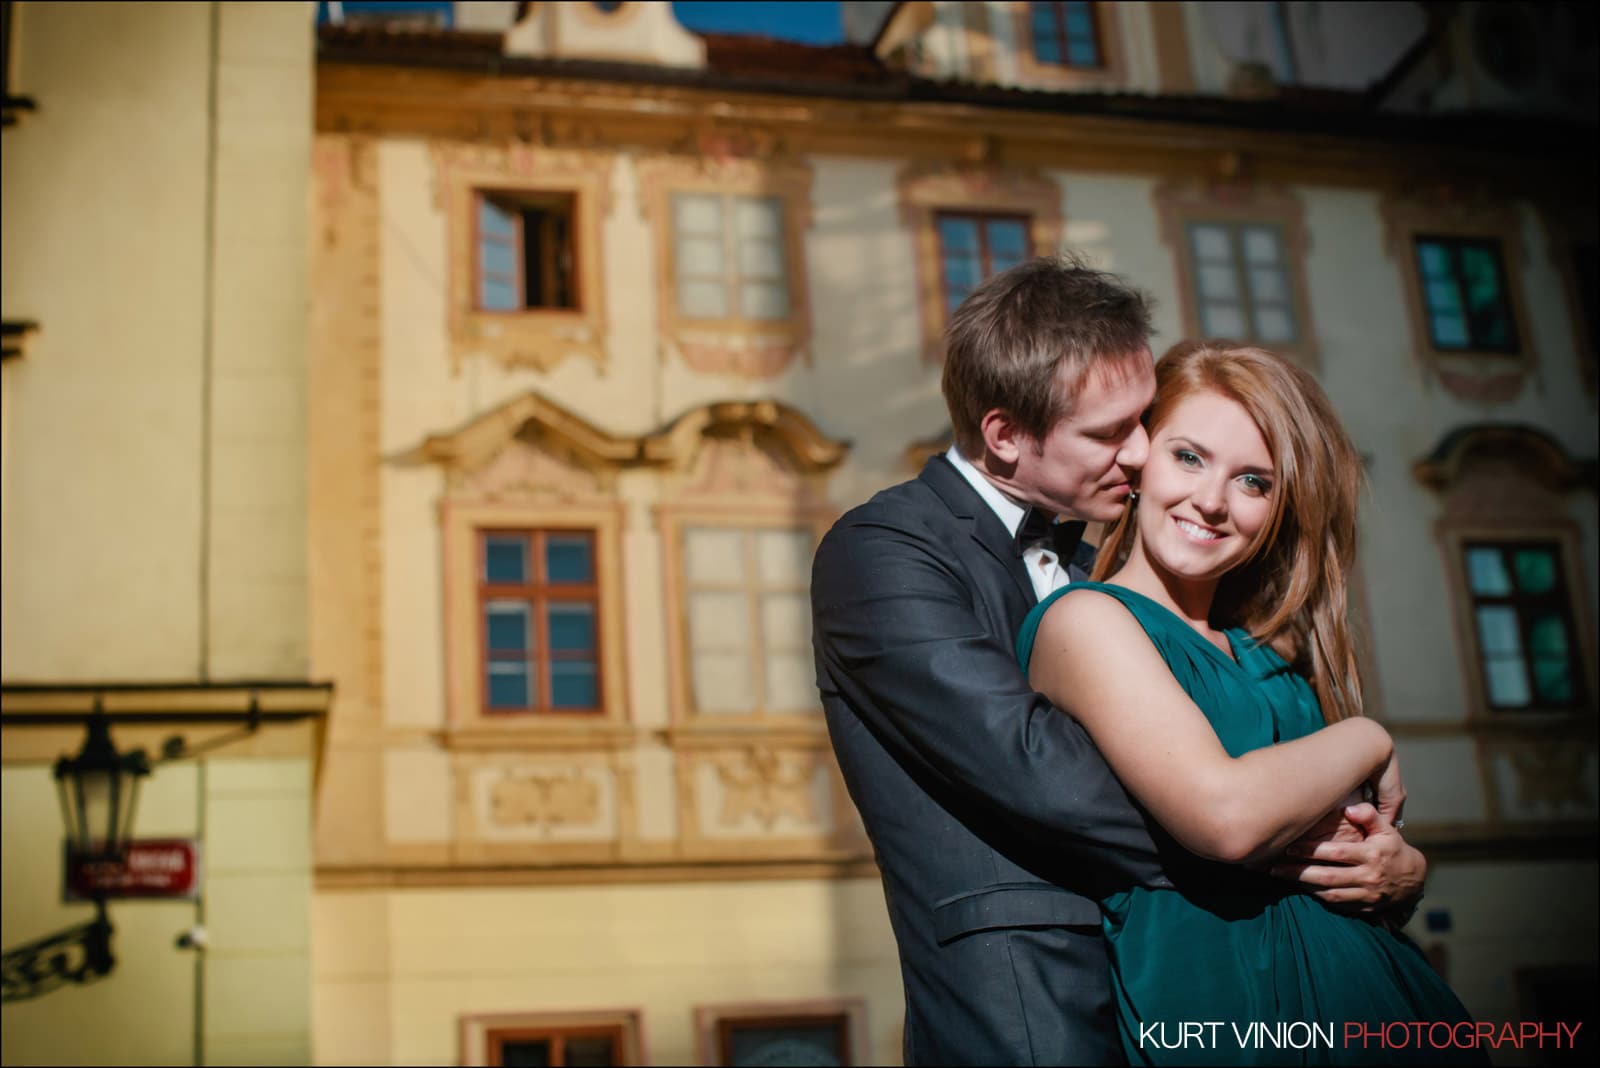 Elopement wedding Prague / Polya & Dirk wedding portraits at Prague Castle